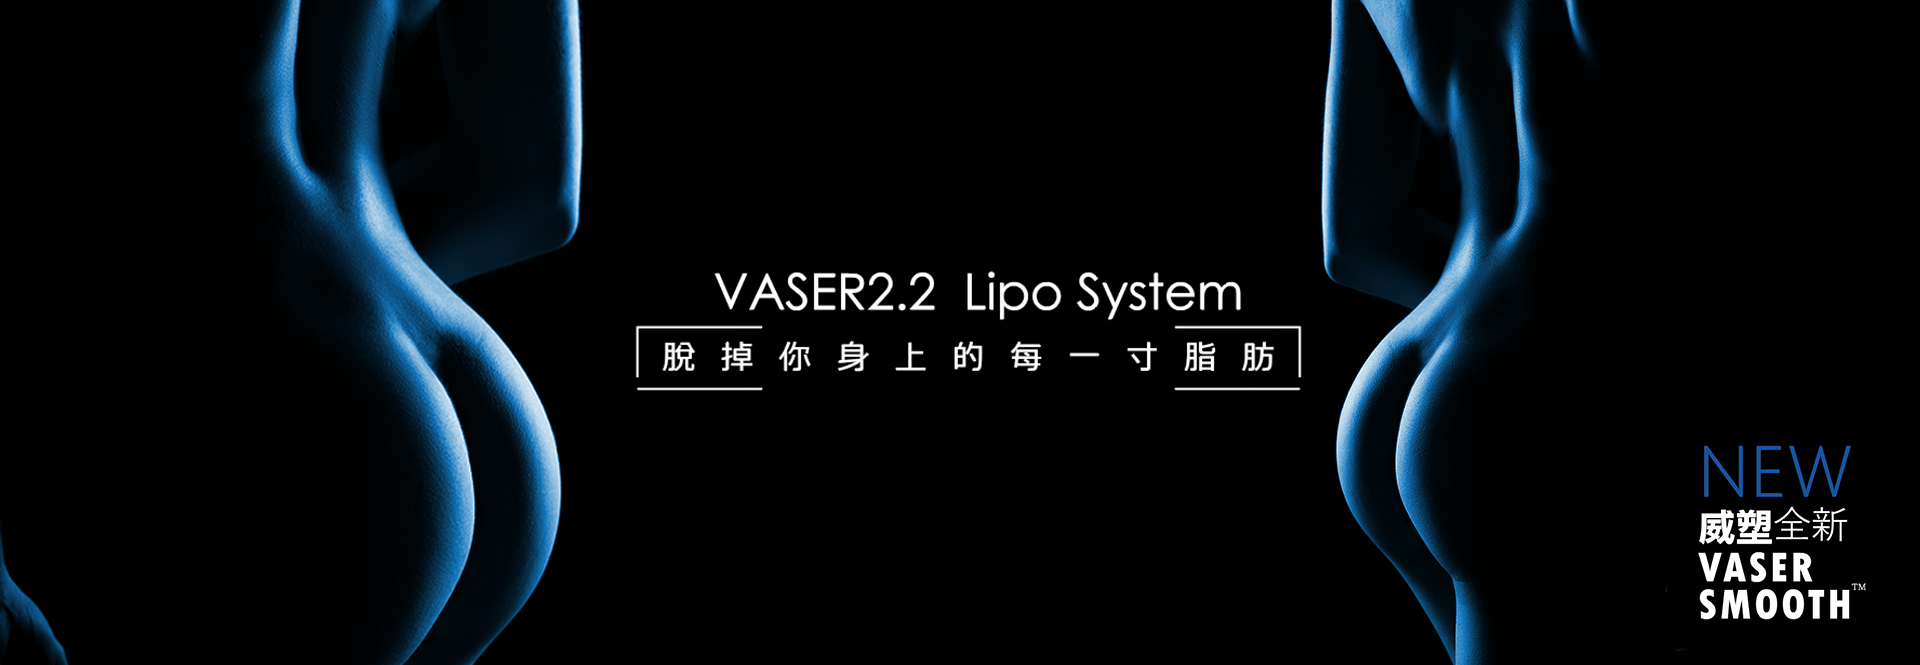 1920x655-vaser new 拷貝